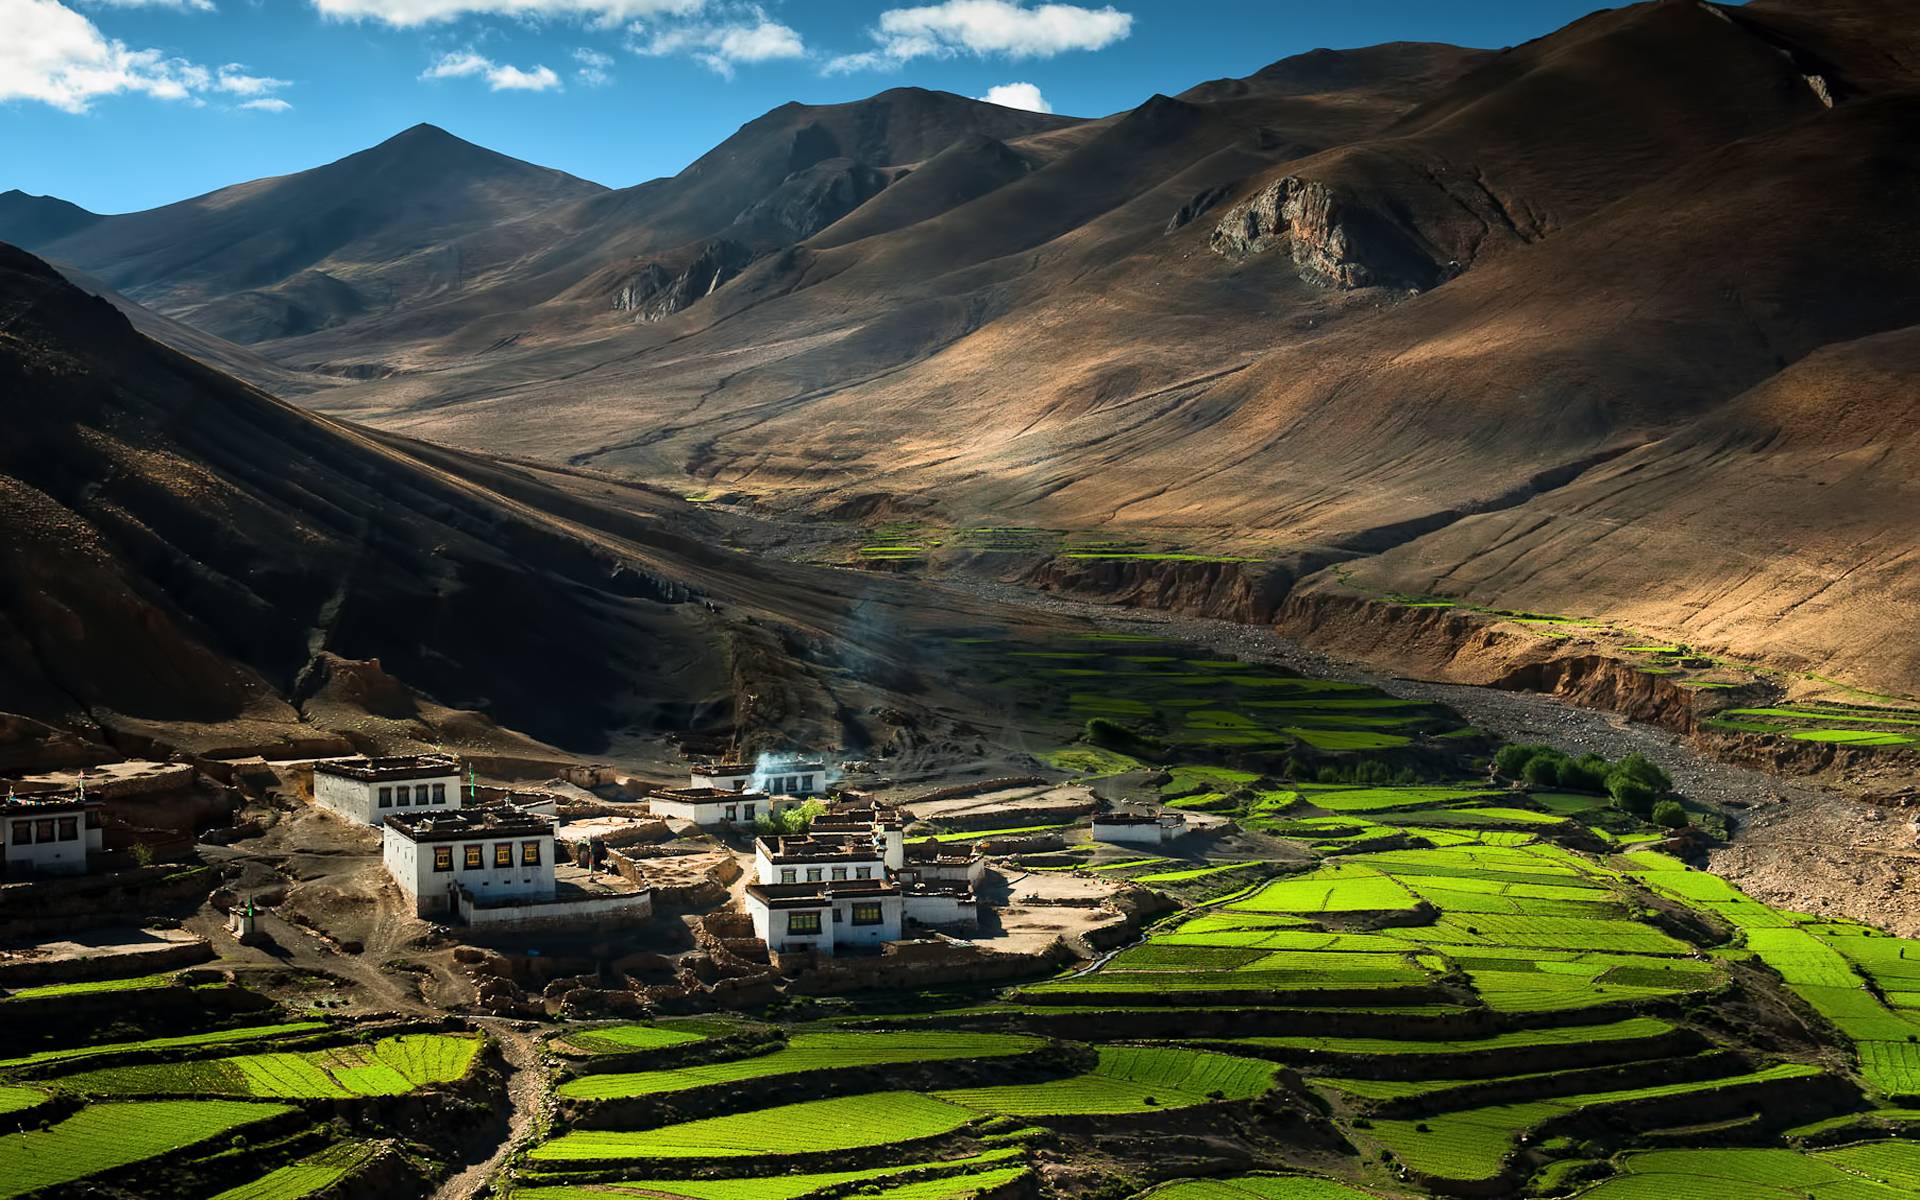 Fonds d&;écran Tibet, tous les wallpaper Tibet